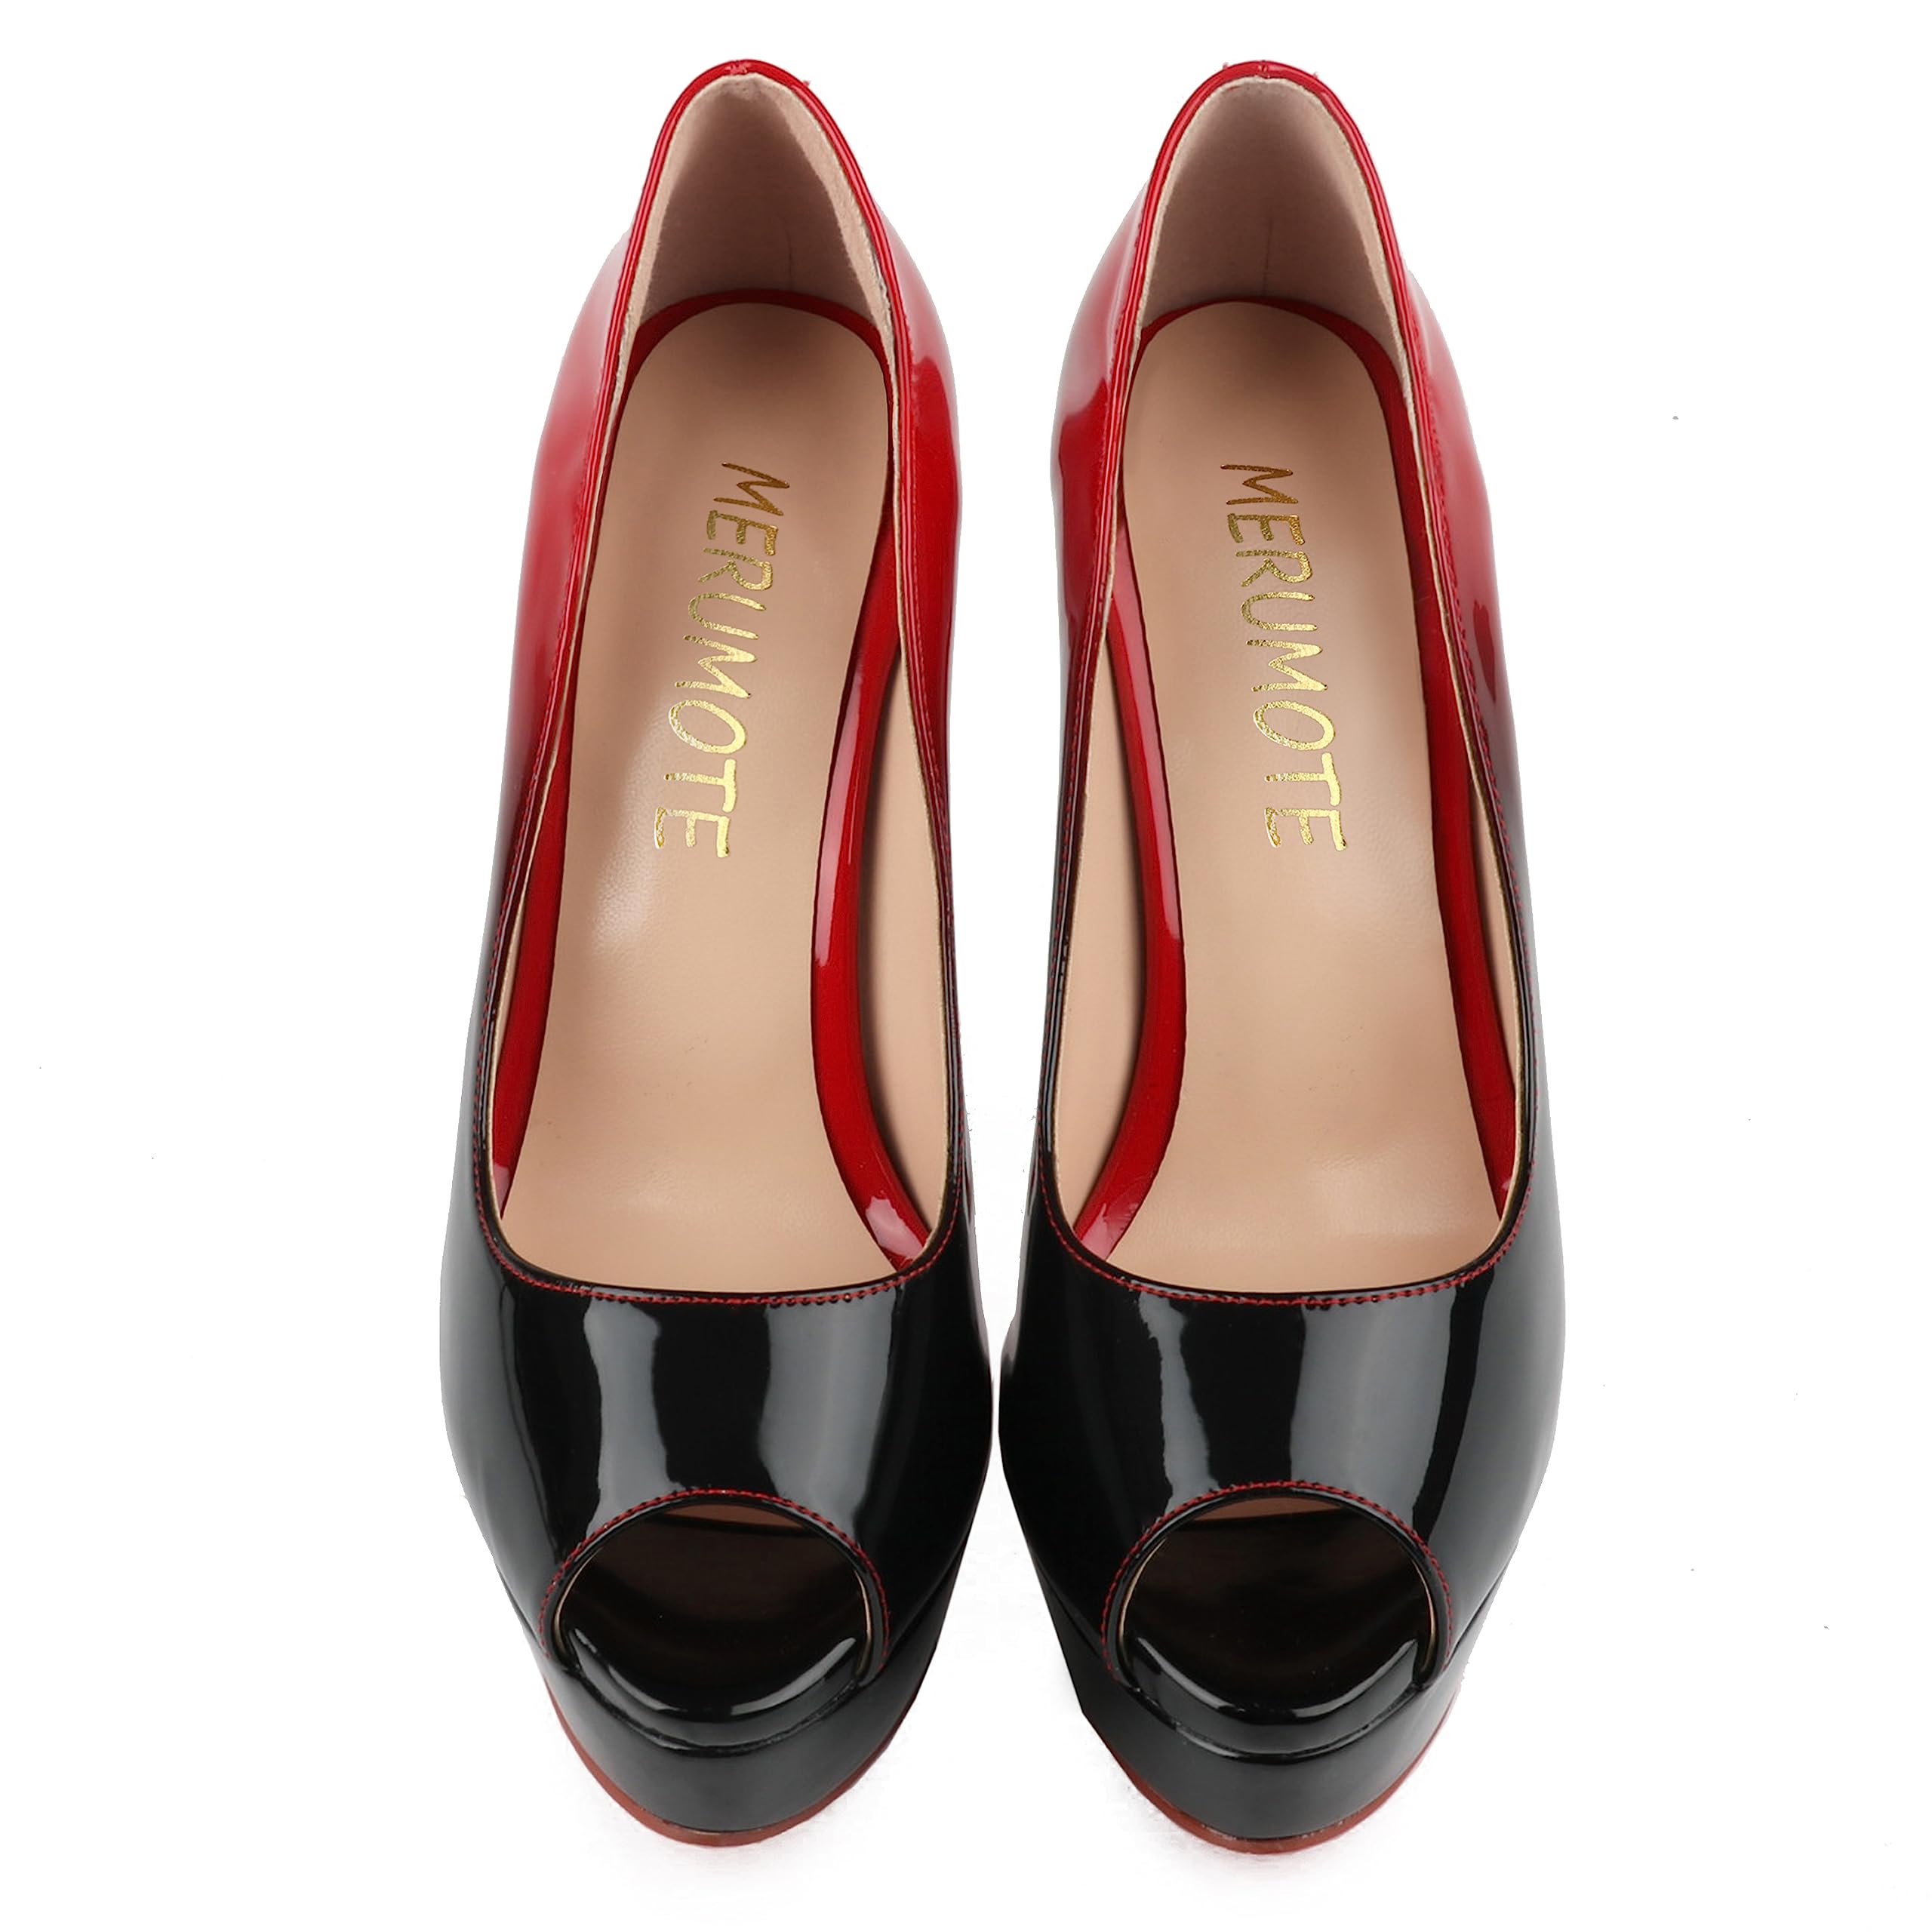 Lexx 6 inch heel - Black Lace Up Thigh High Platform - Burju Shoes